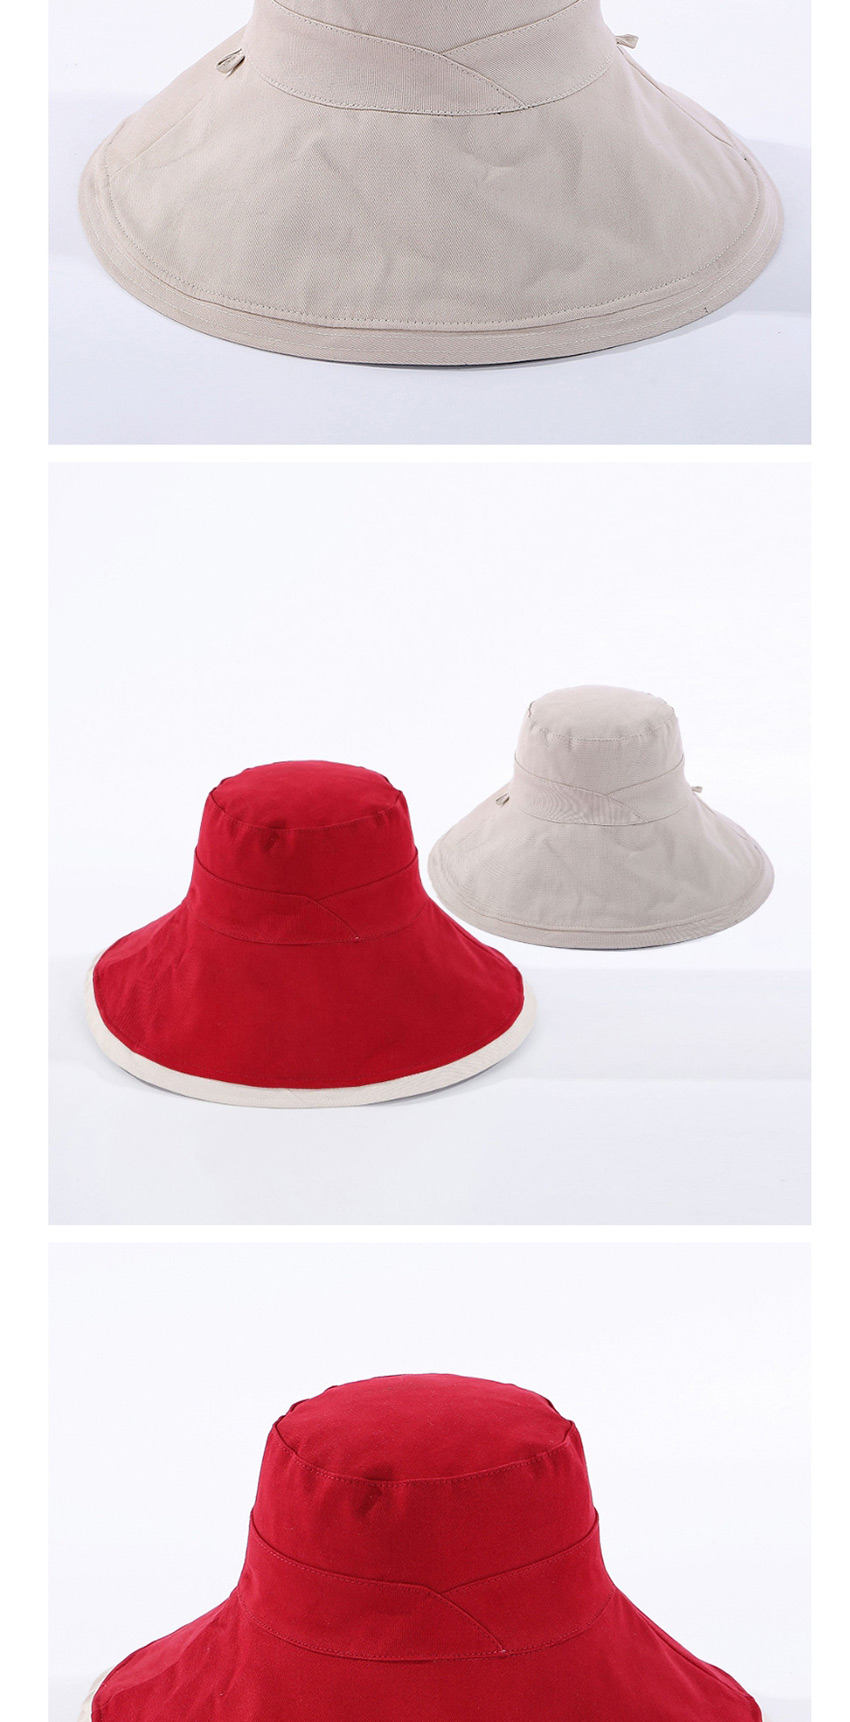 Fashion Navy Cotton Fisherman Hat,Sun Hats